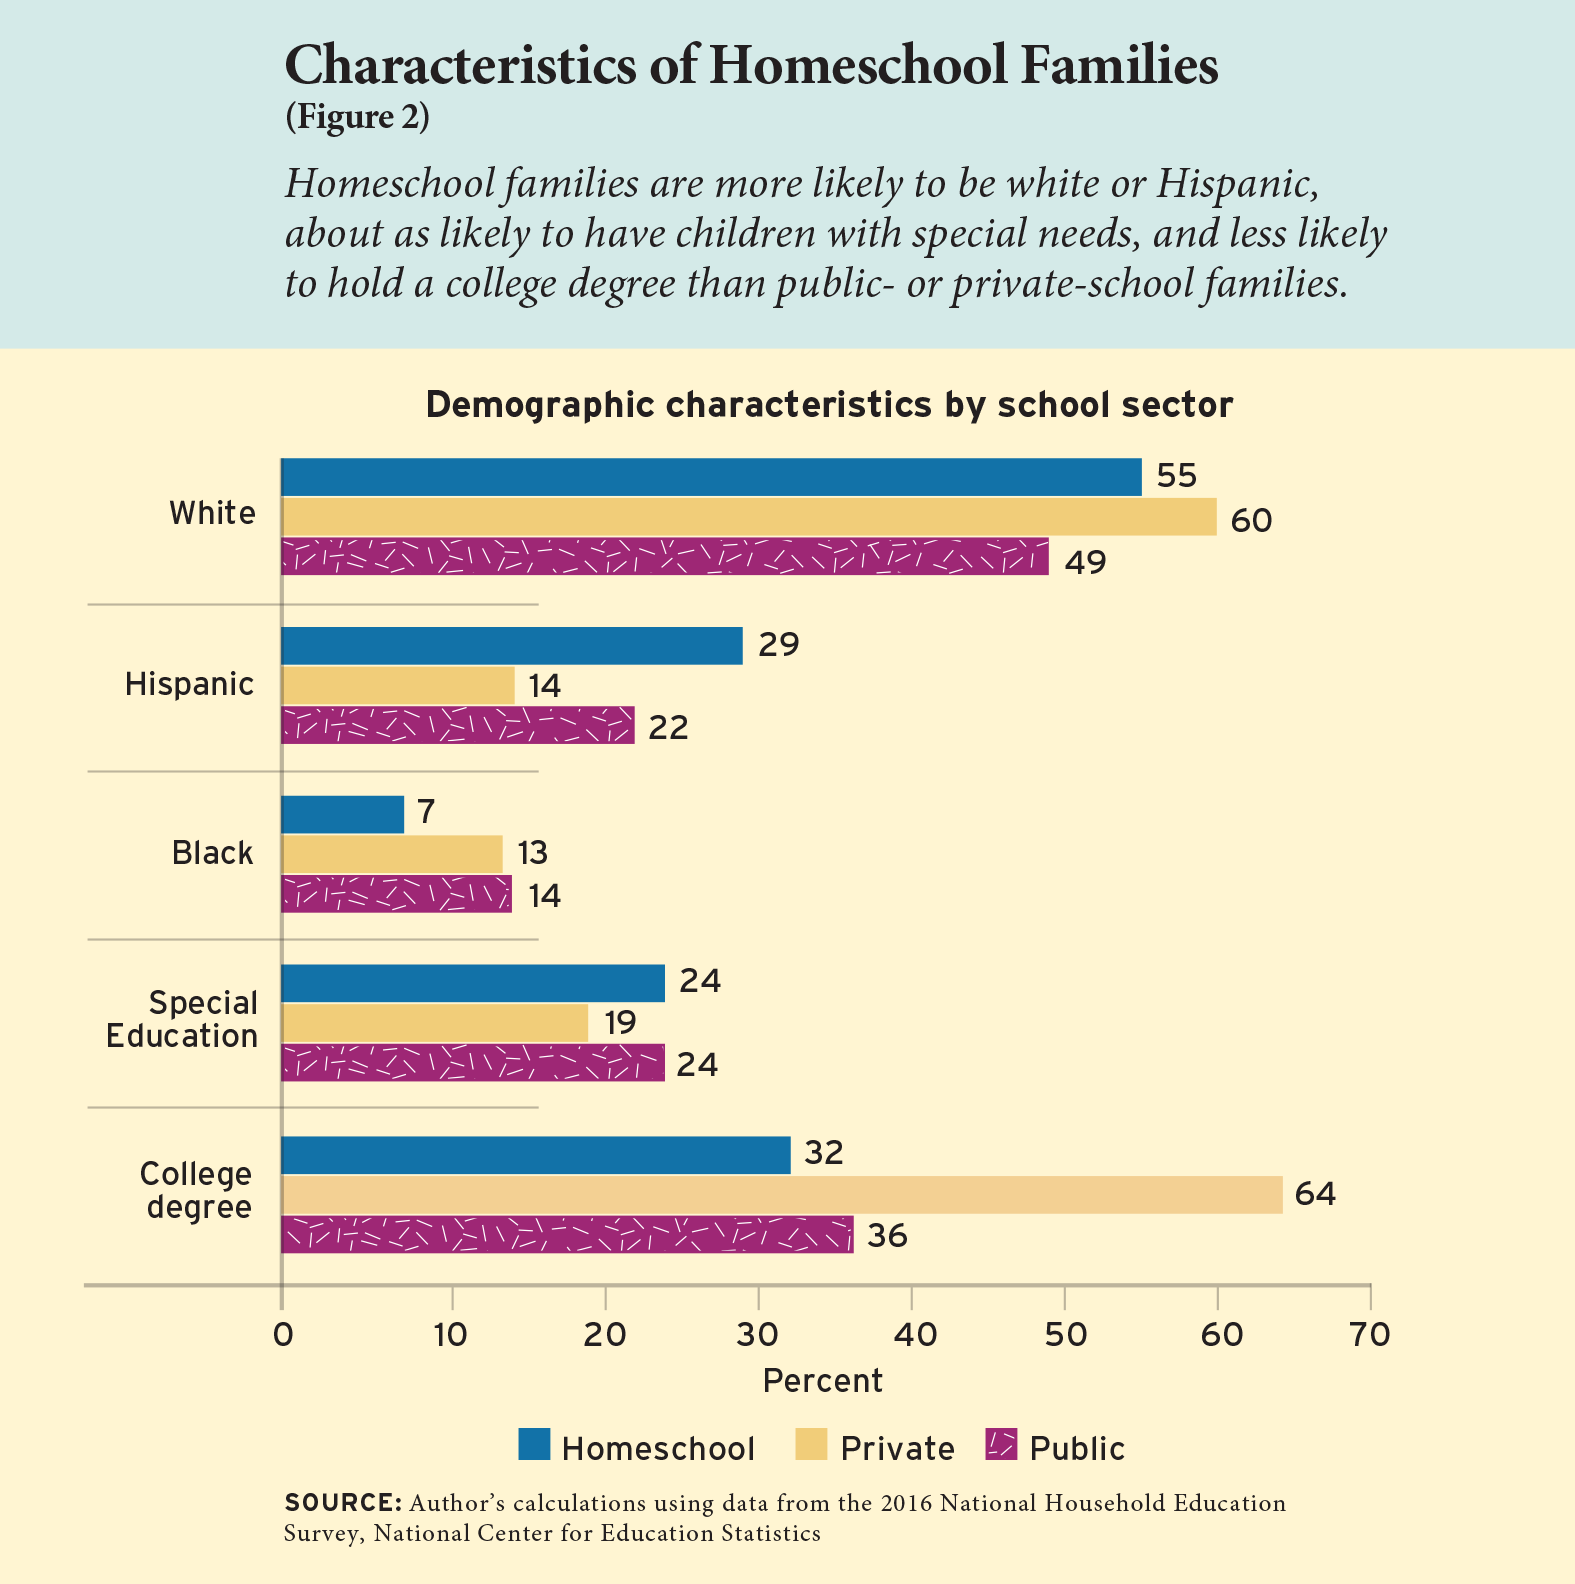 Figure 2: Characteristics of Homeschool Families